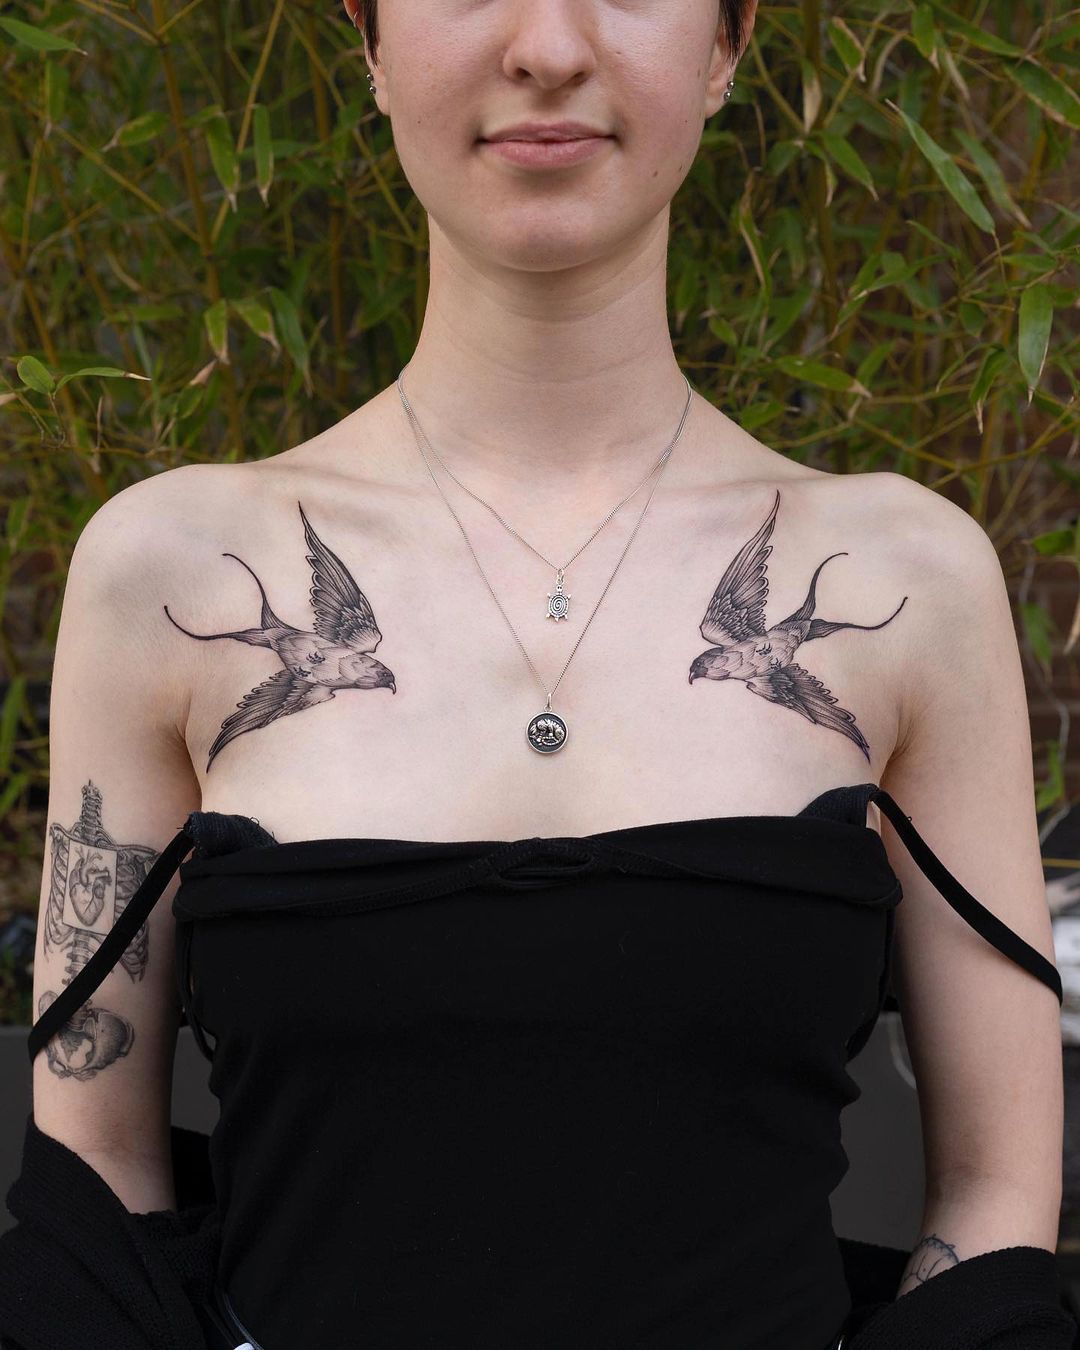 girl chest tattoos designs